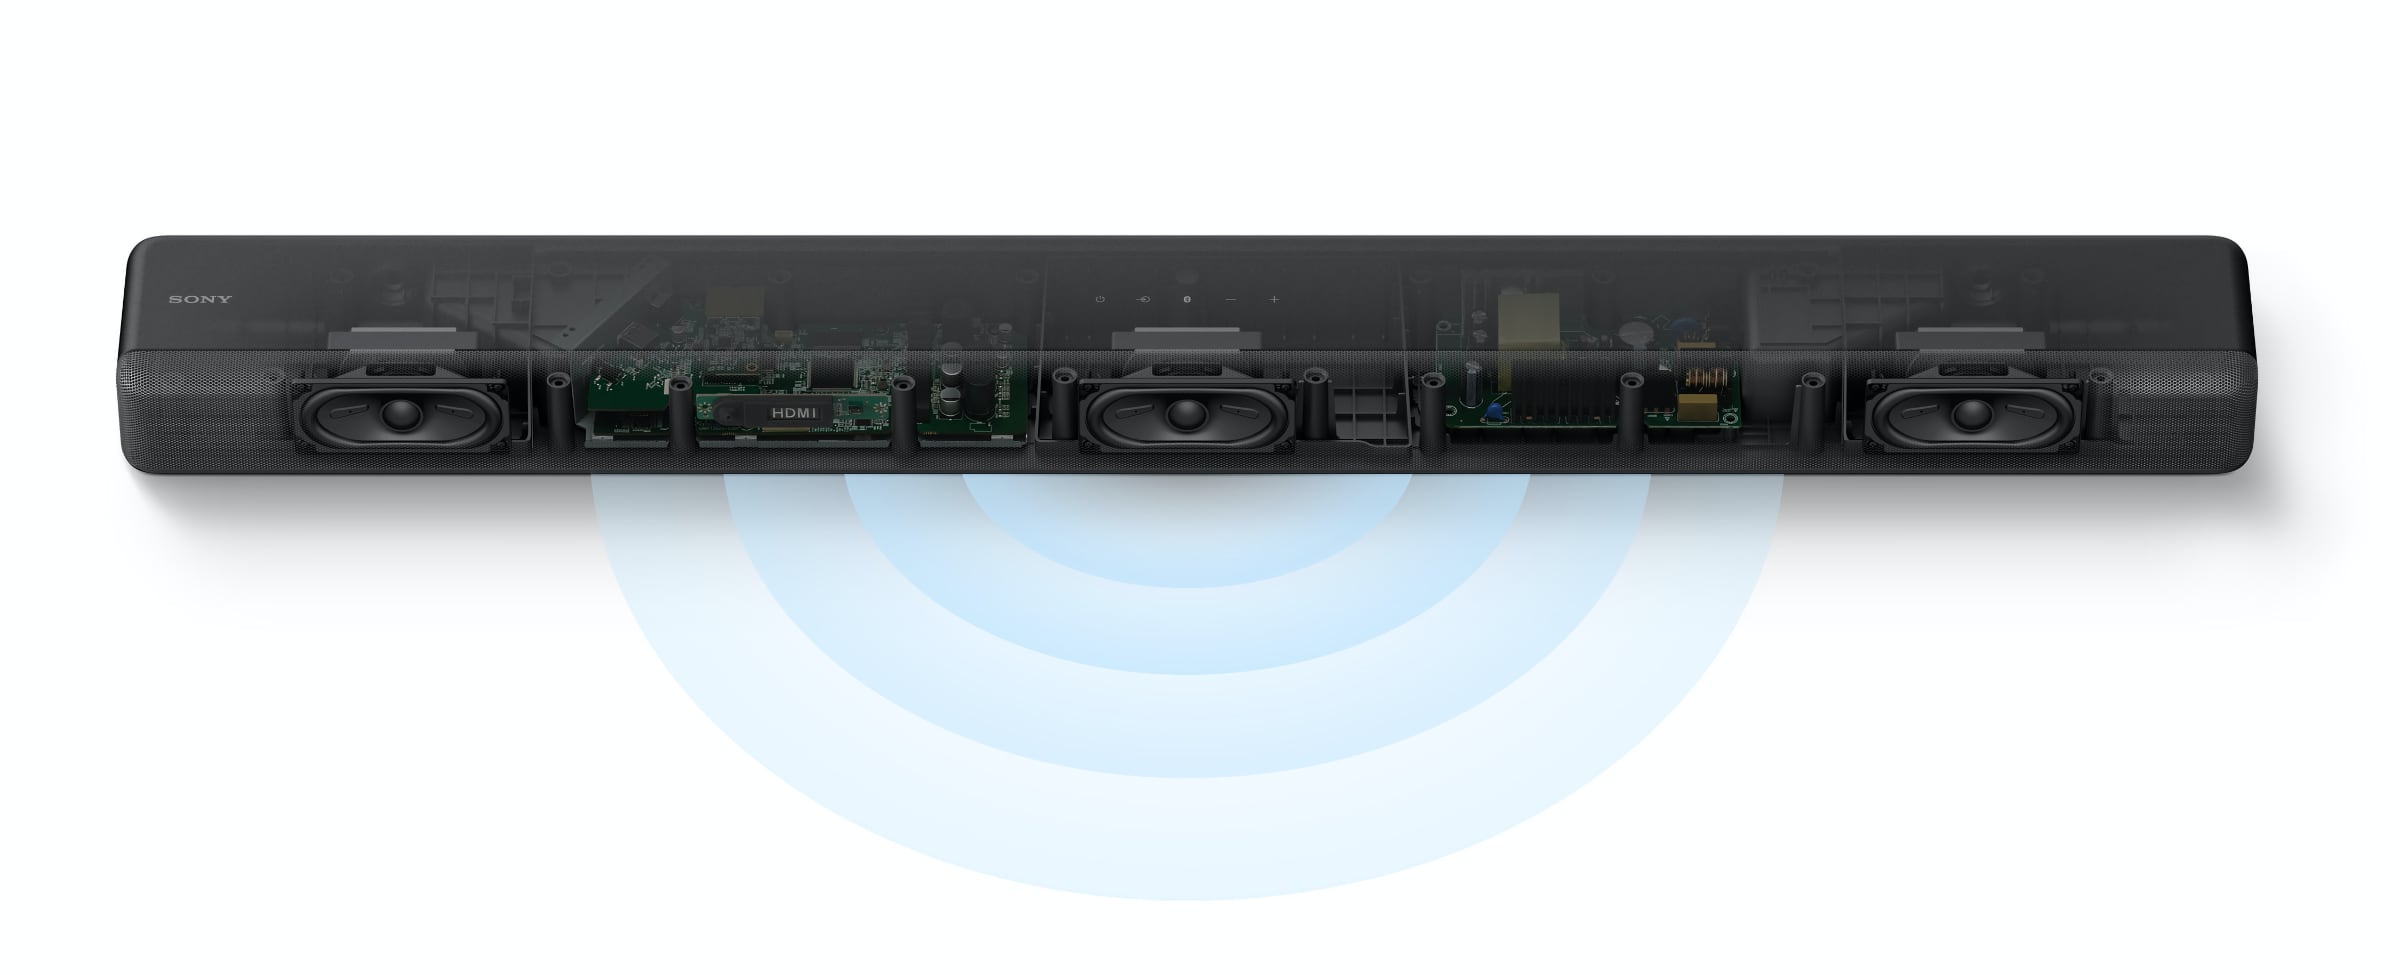 øverst kor Konvention New soundbars from Sony: 3.1ch HT-G700 and 5.1ch HT-S20R - FlatpanelsHD